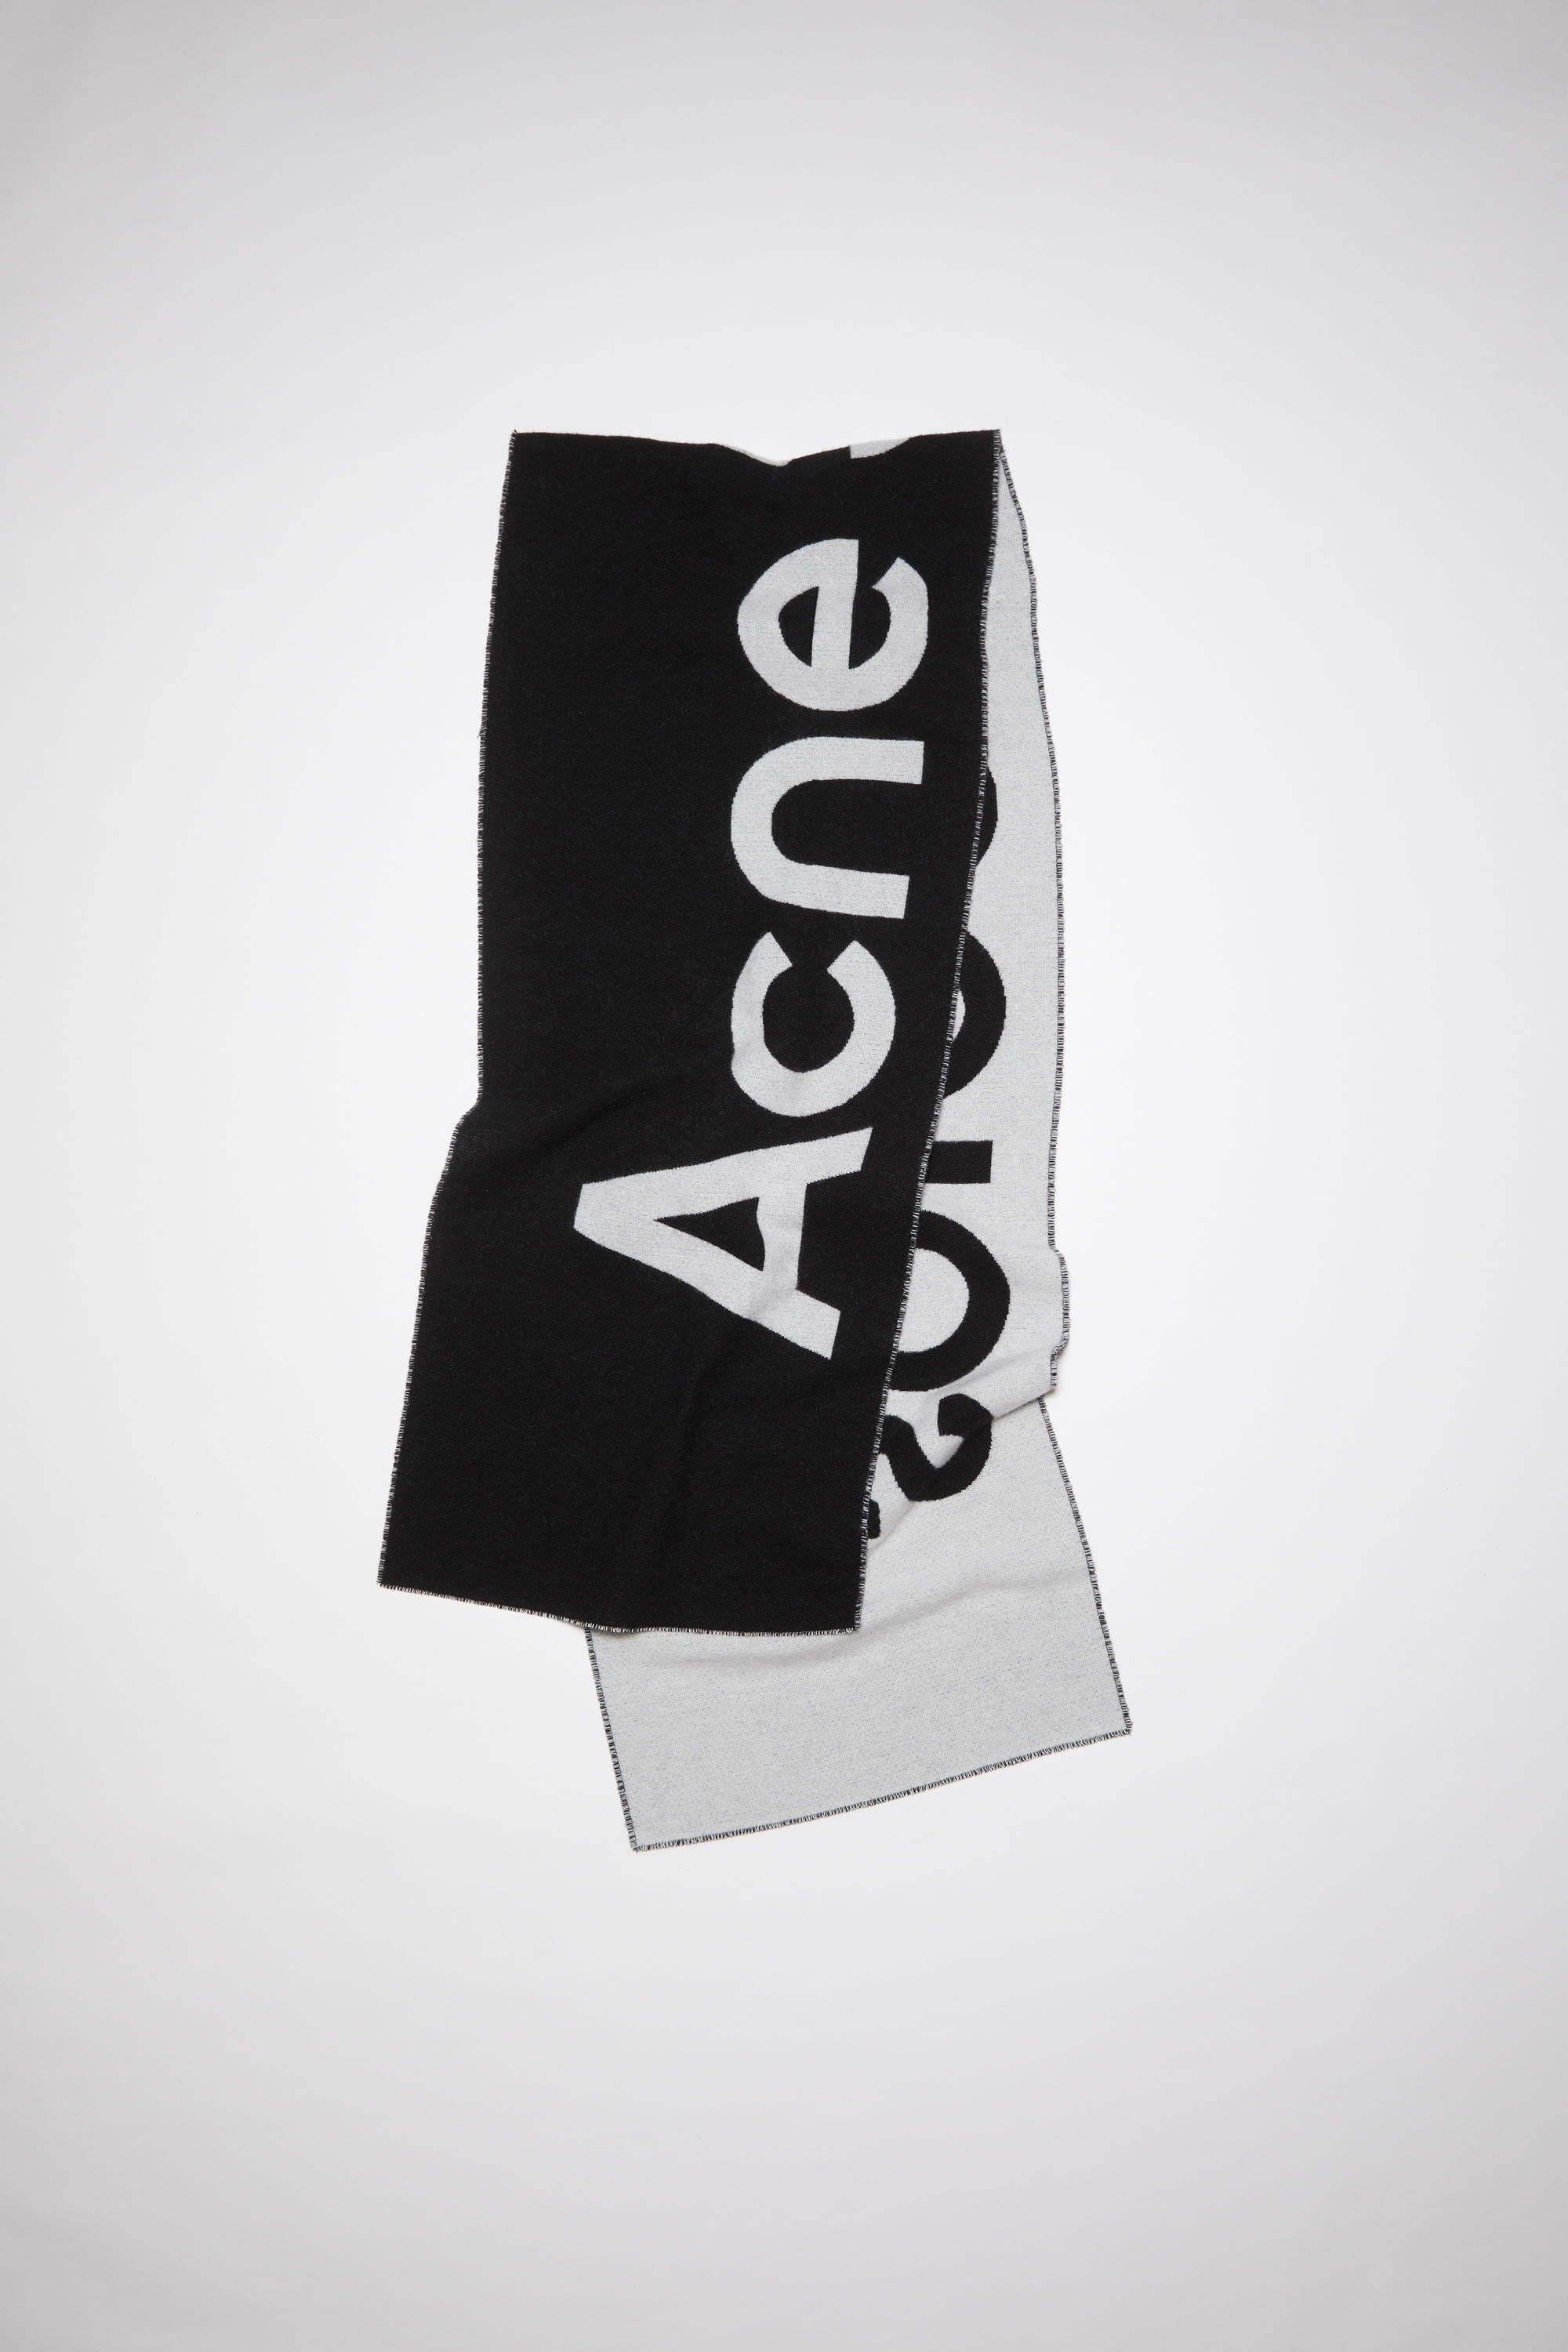 Acne Studios アクネLOGO JACQUARD SCARF